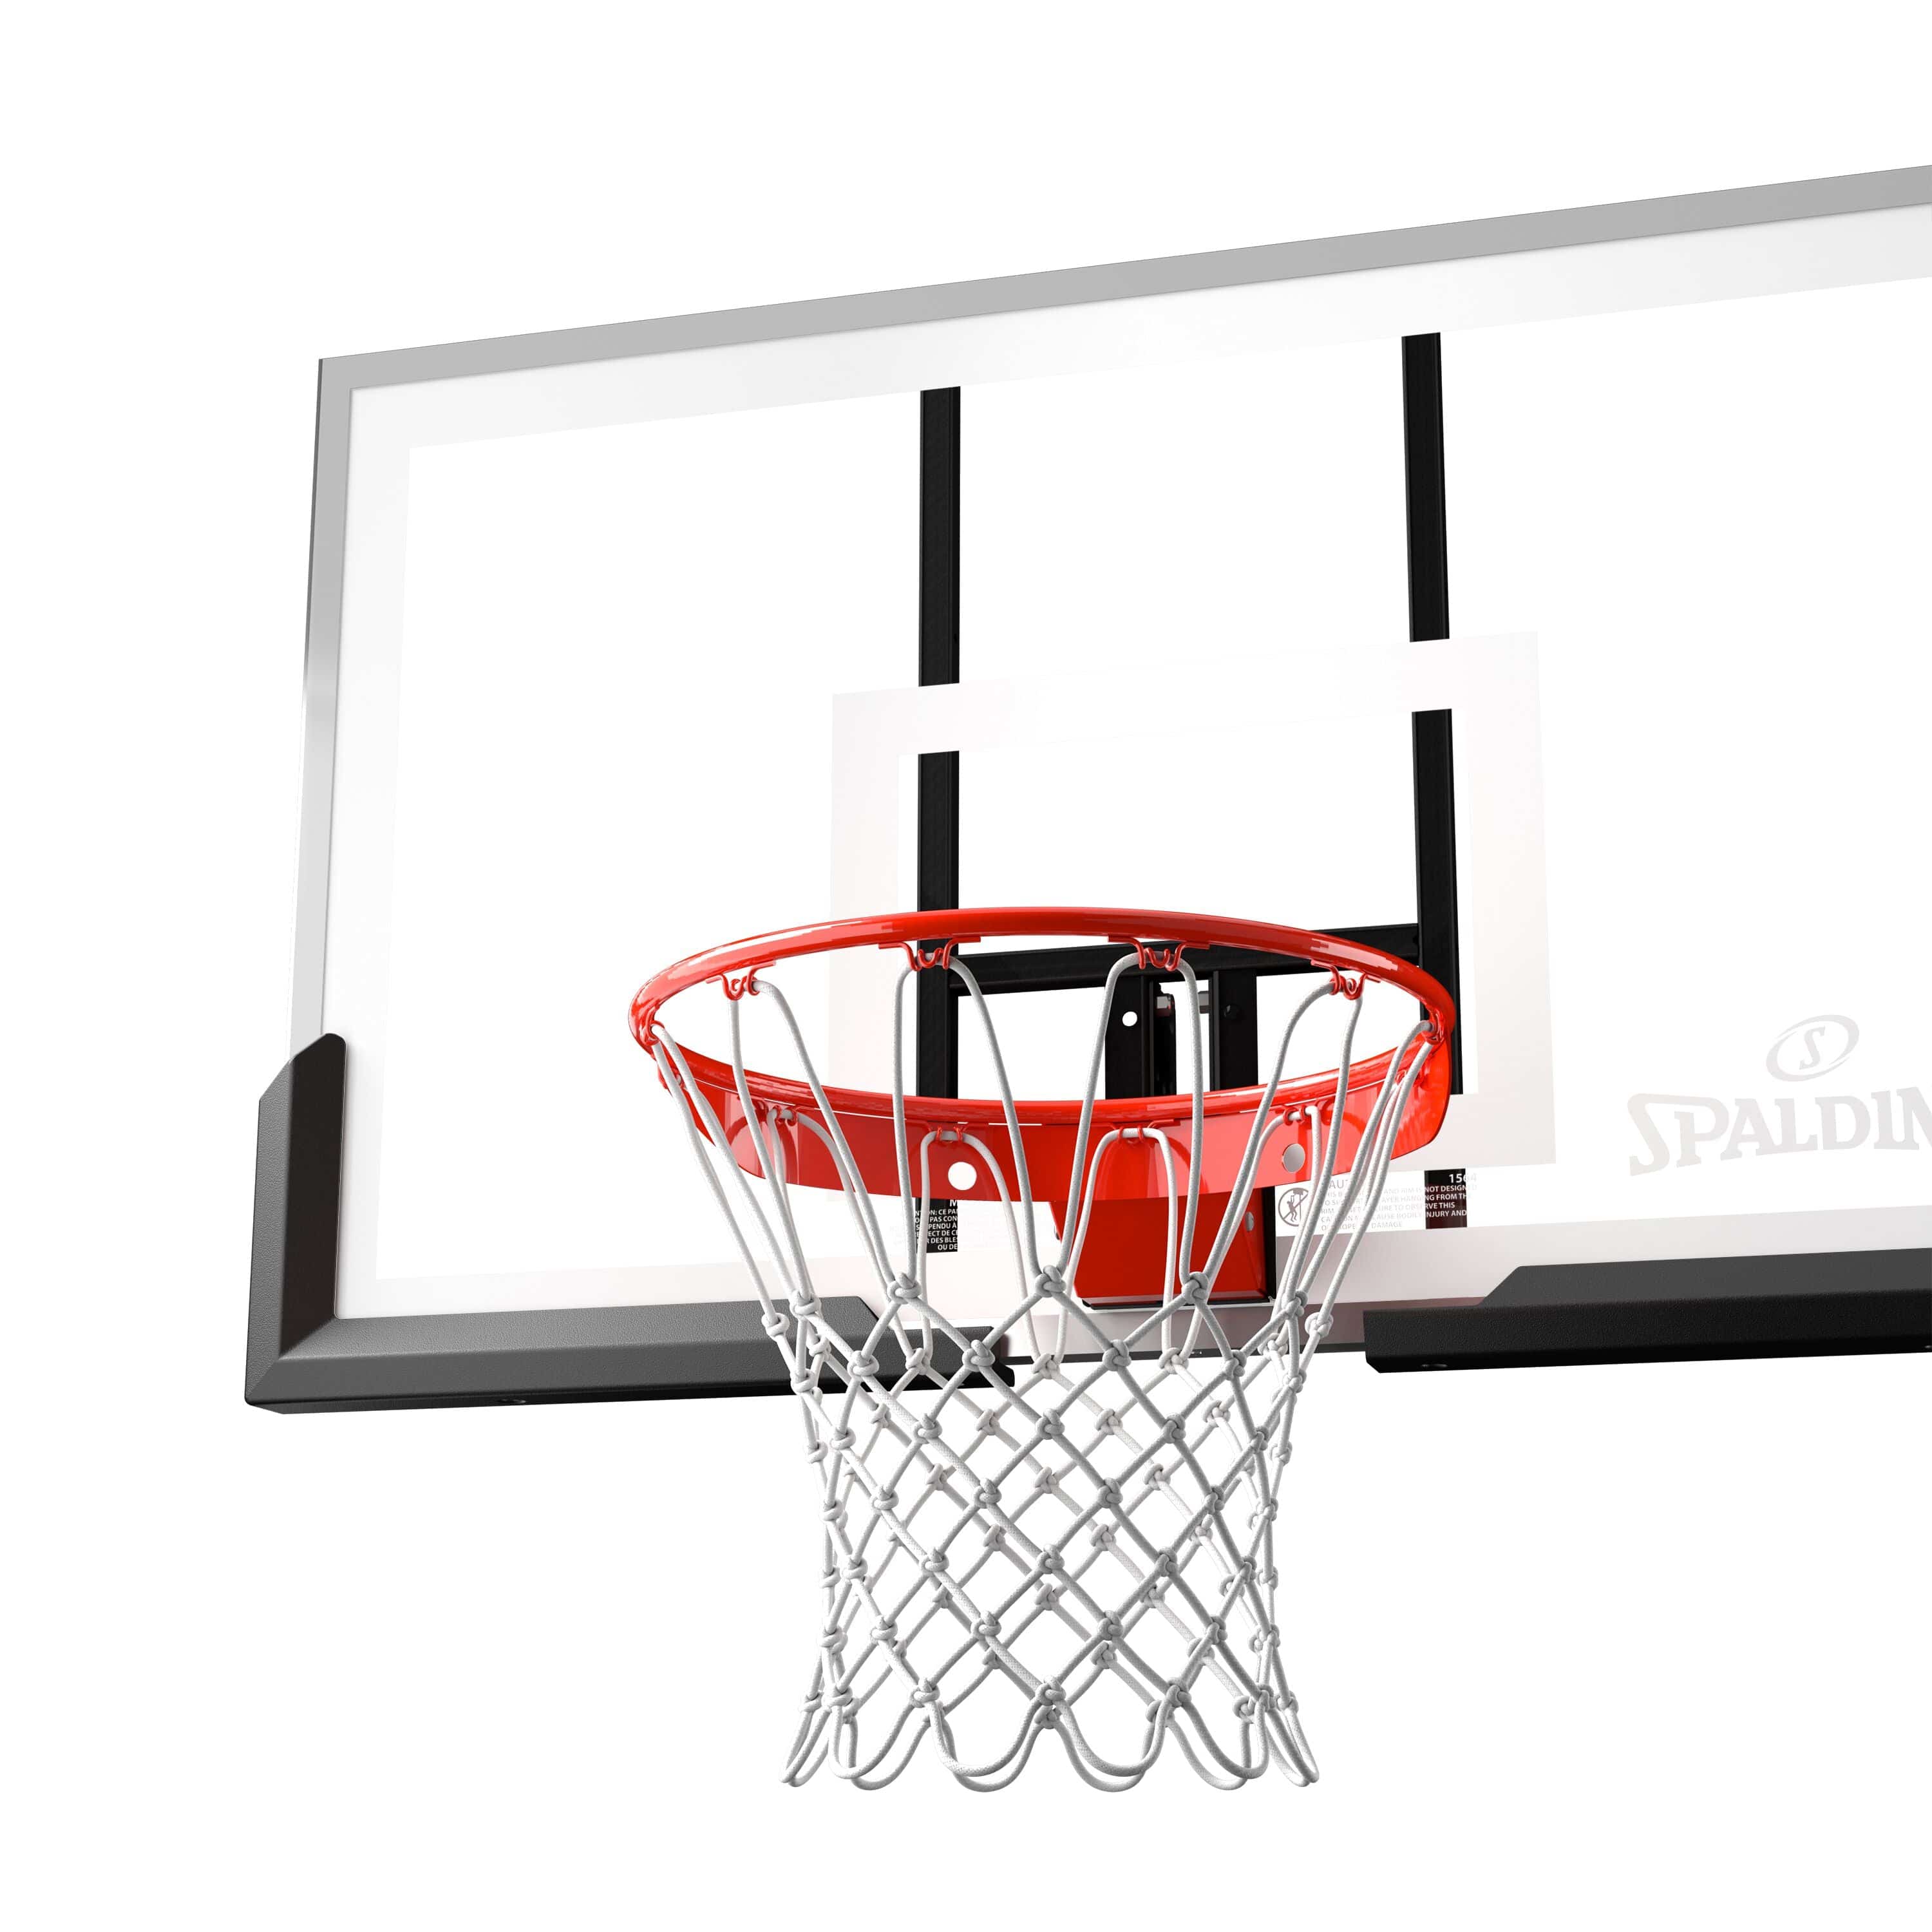 Spalding NBA 52 In. Acrylic Basketball Backboard & Rim Combo Hoop